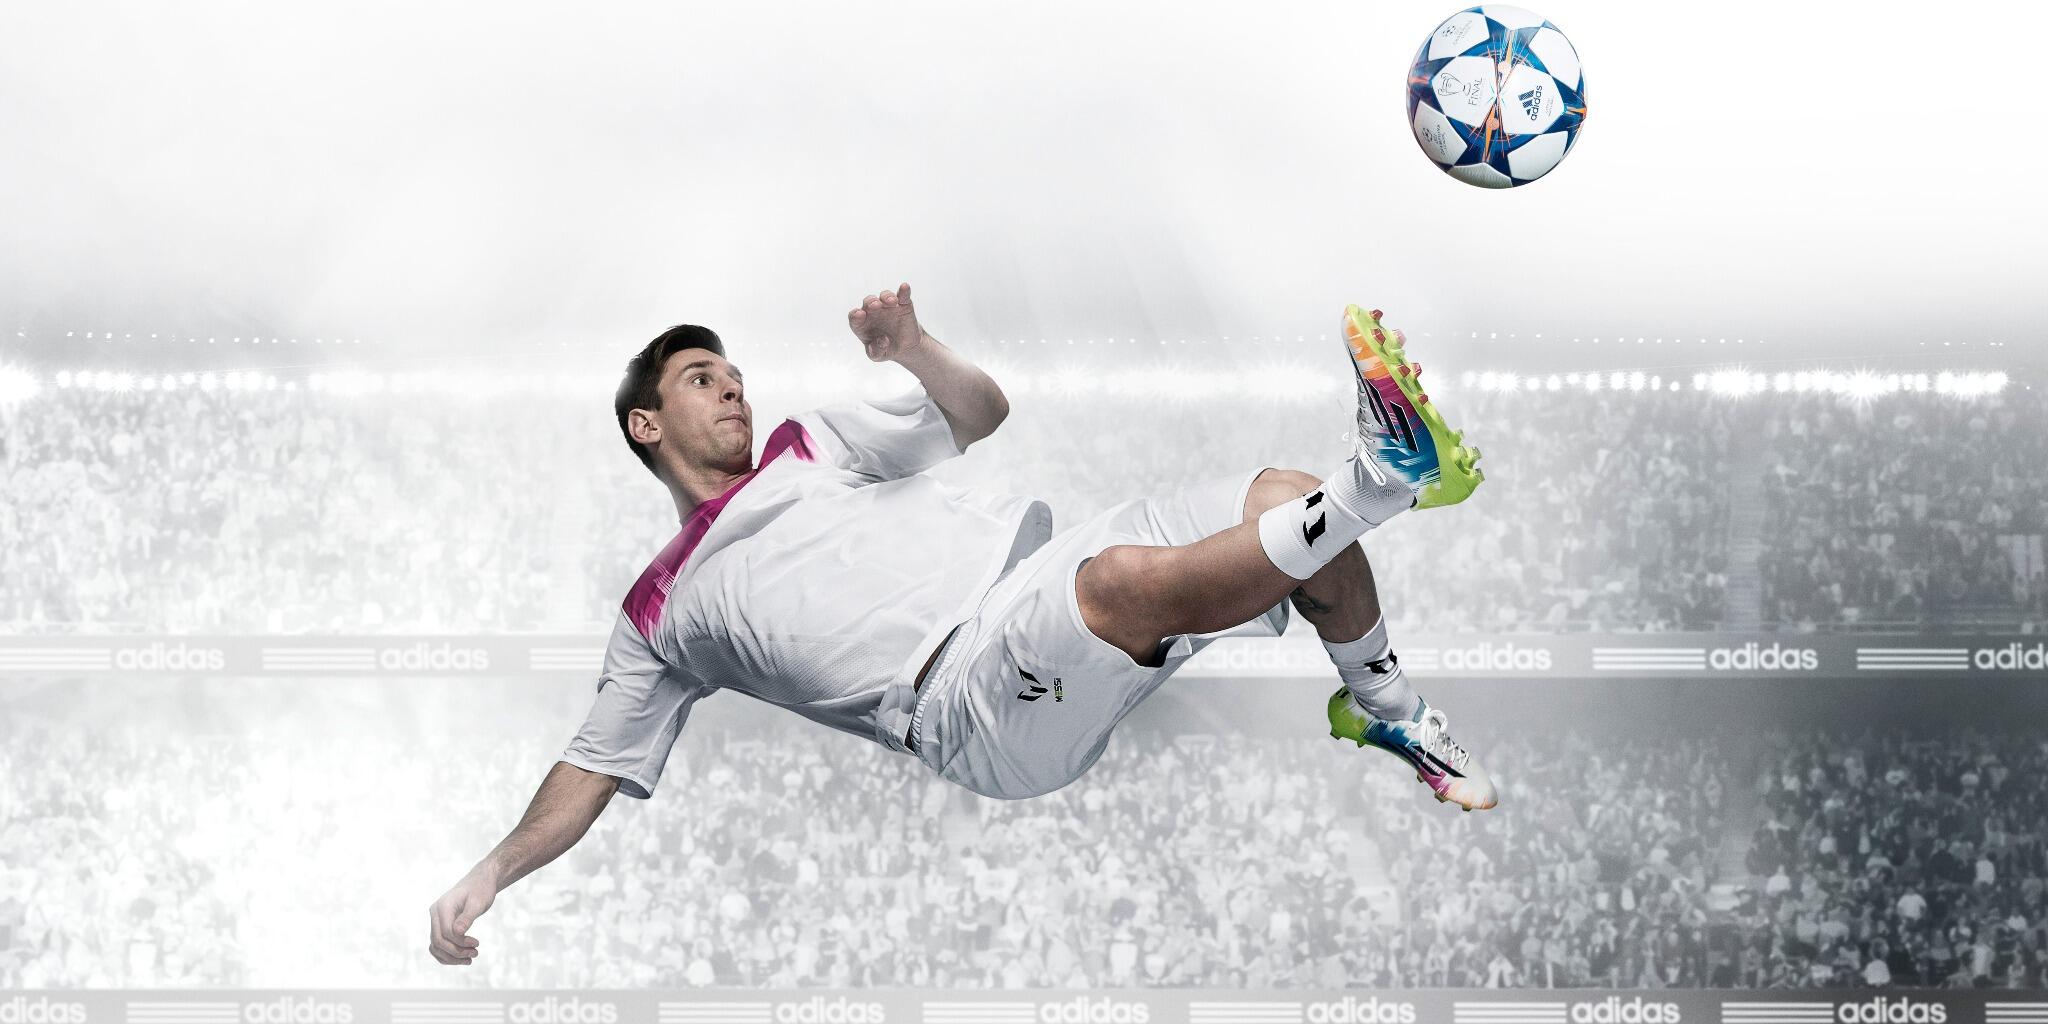 adidas en Twitter: "Fast or fail. The #F50 Messi. http://t.co/vmuBpbg0yr" / Twitter